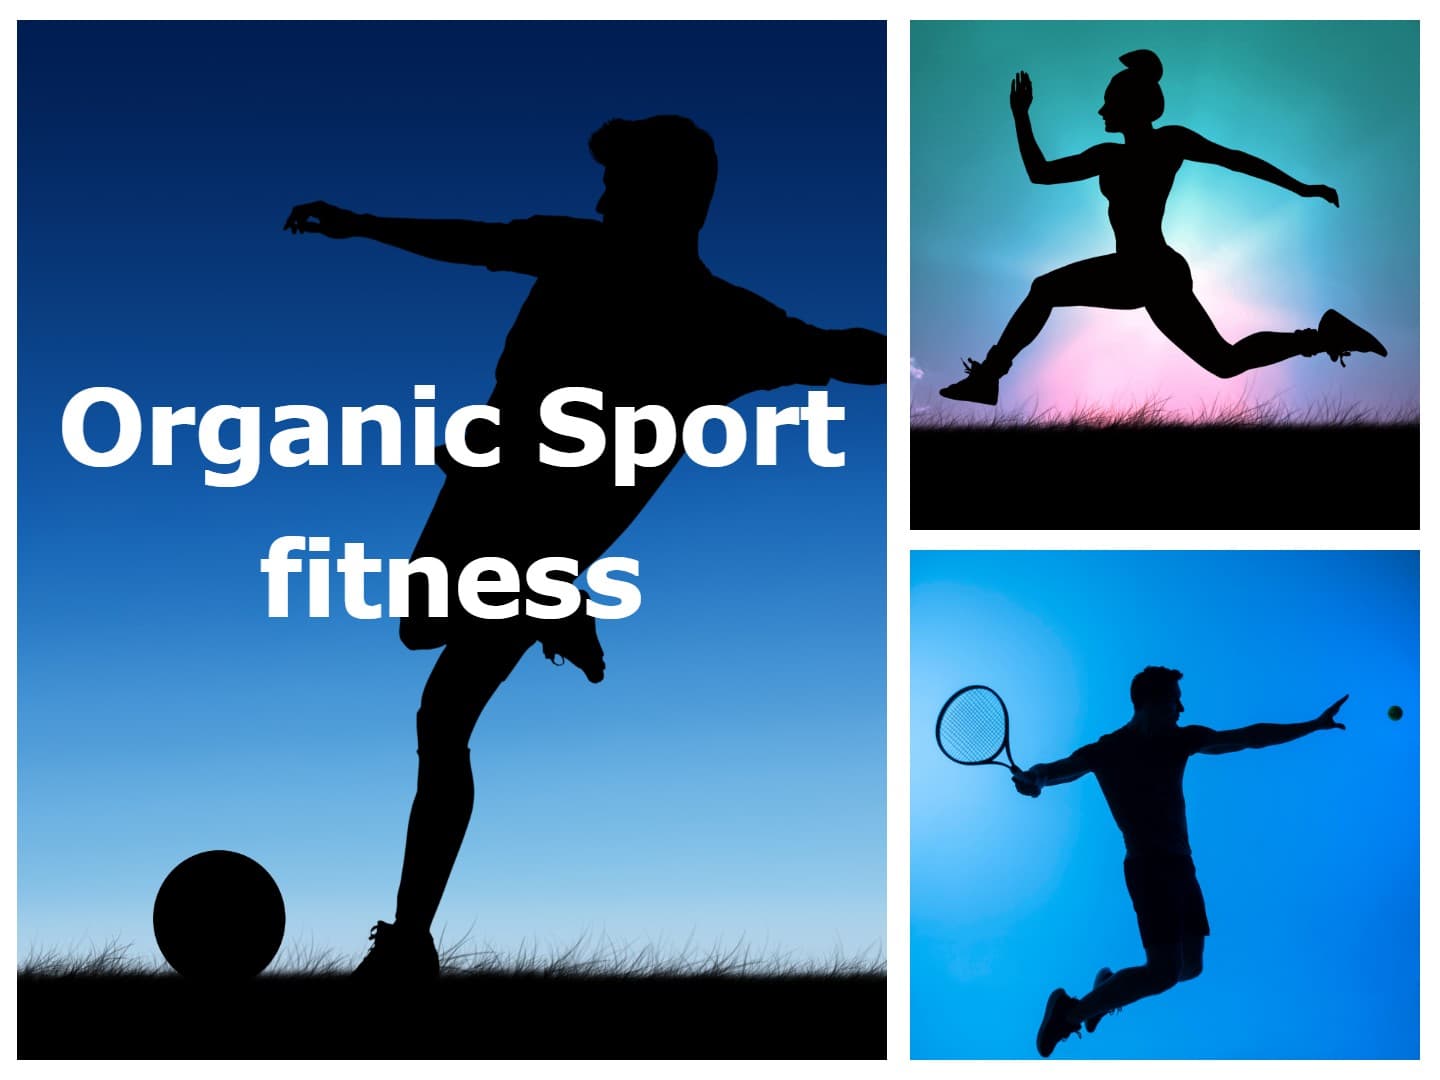 Organic Sport fitness